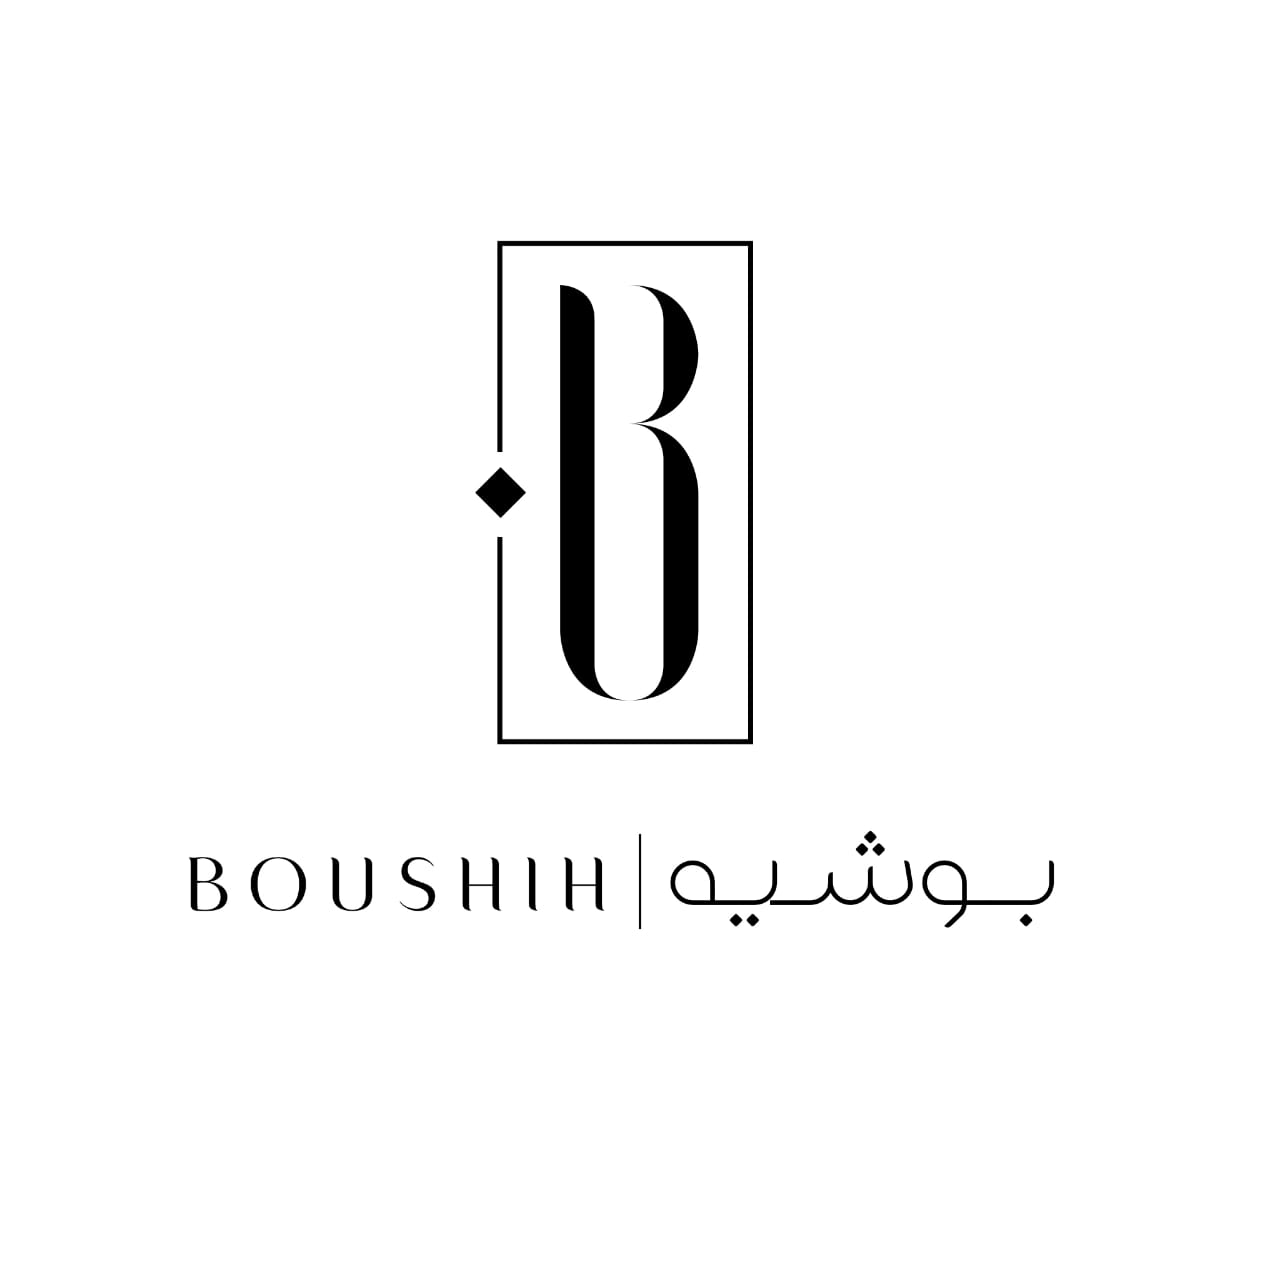 Boushih